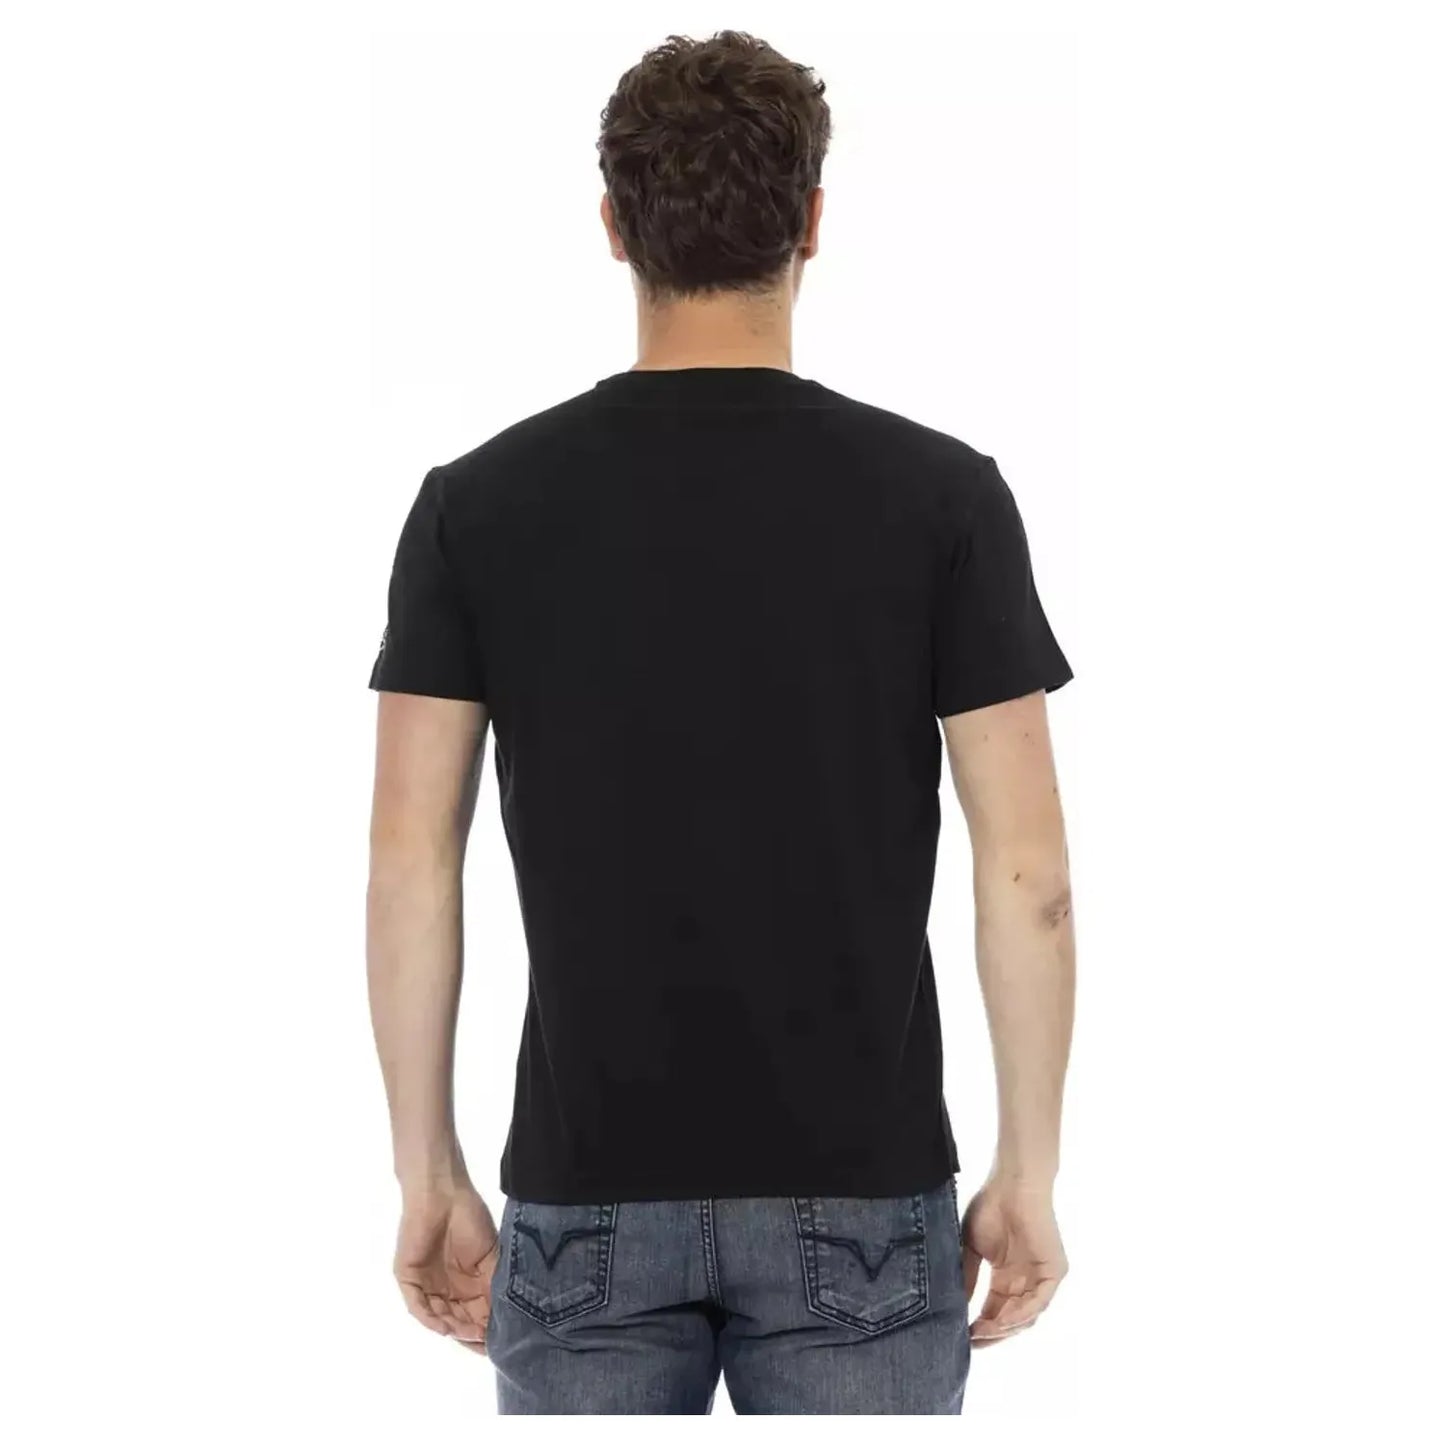 Trussardi Action Elegant Casual Black Tee with Unique Front Print black-cotton-t-shirt-32